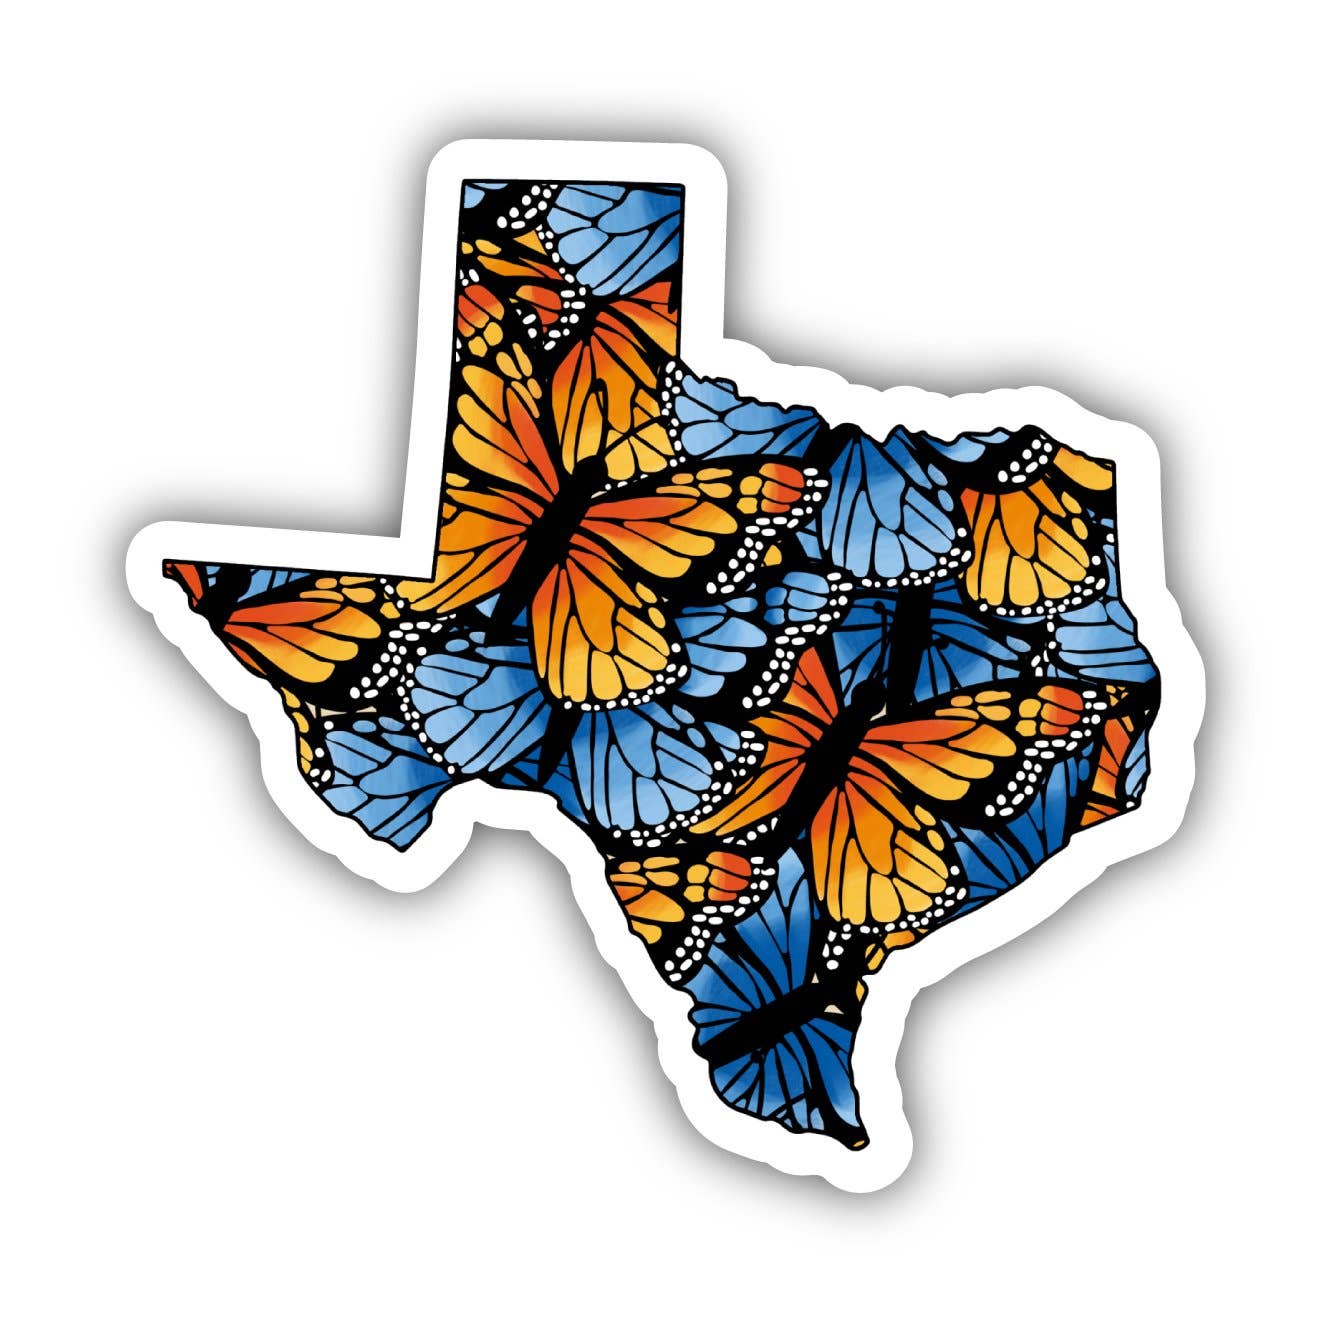 Texas stickers